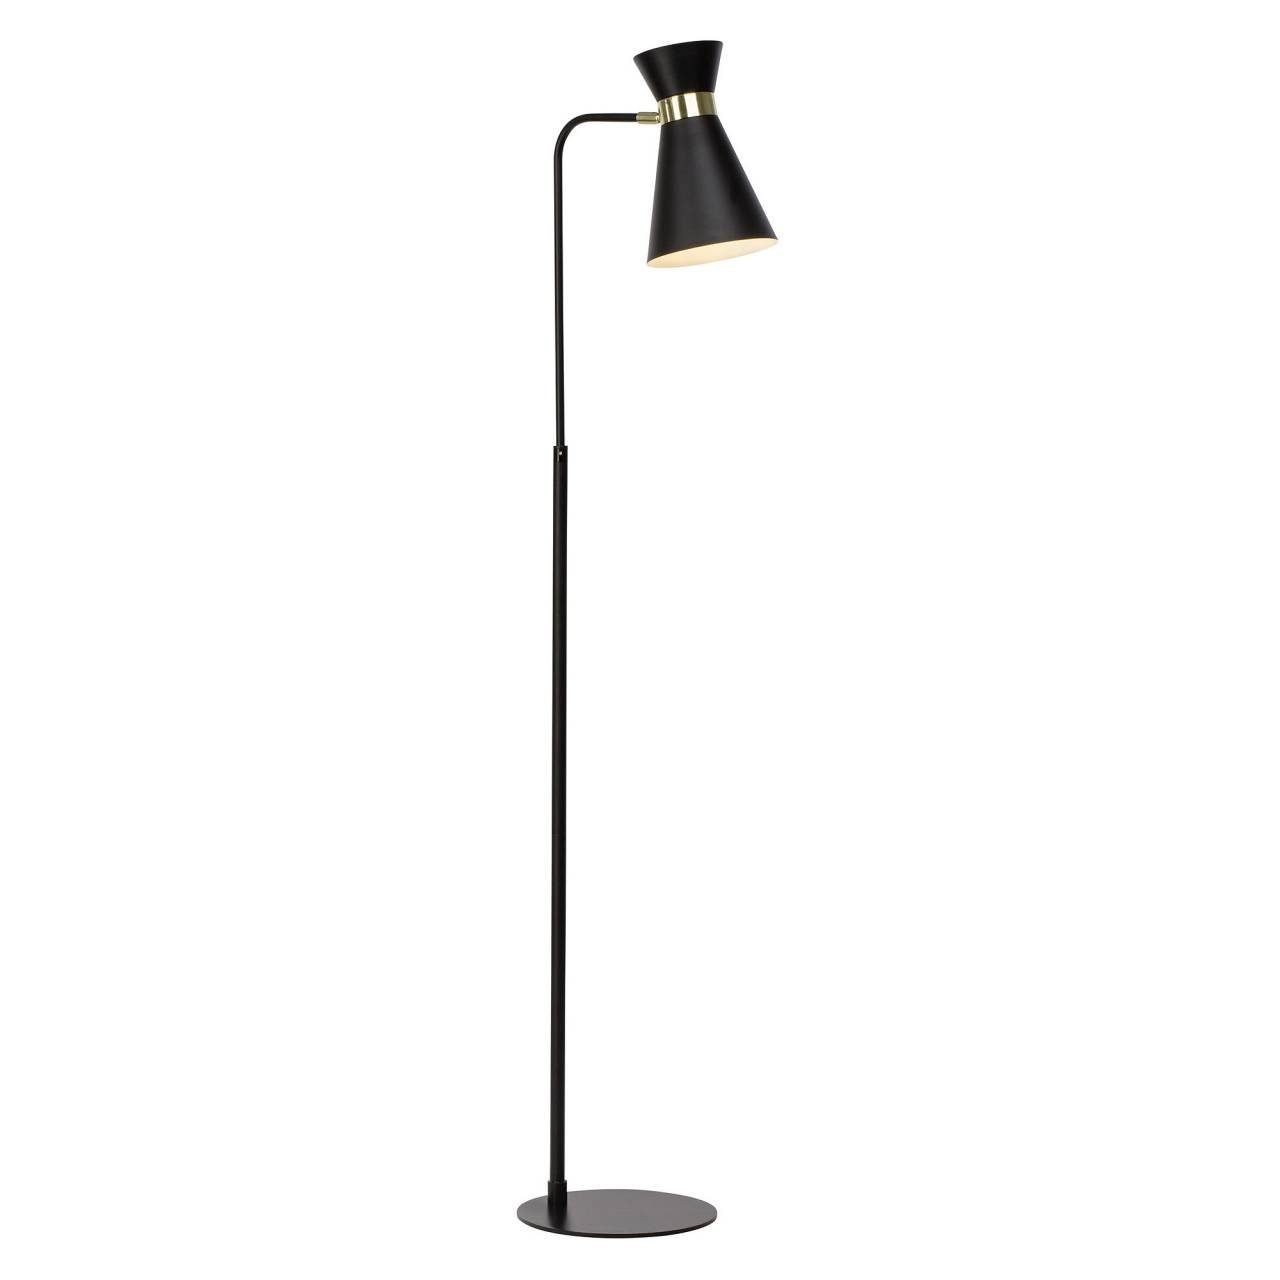 Brilliant Stehlampe Goldy, Lampe Goldy E27, schwarz-matt/gold g. 28W, 1x Standleuchte 1flg A60